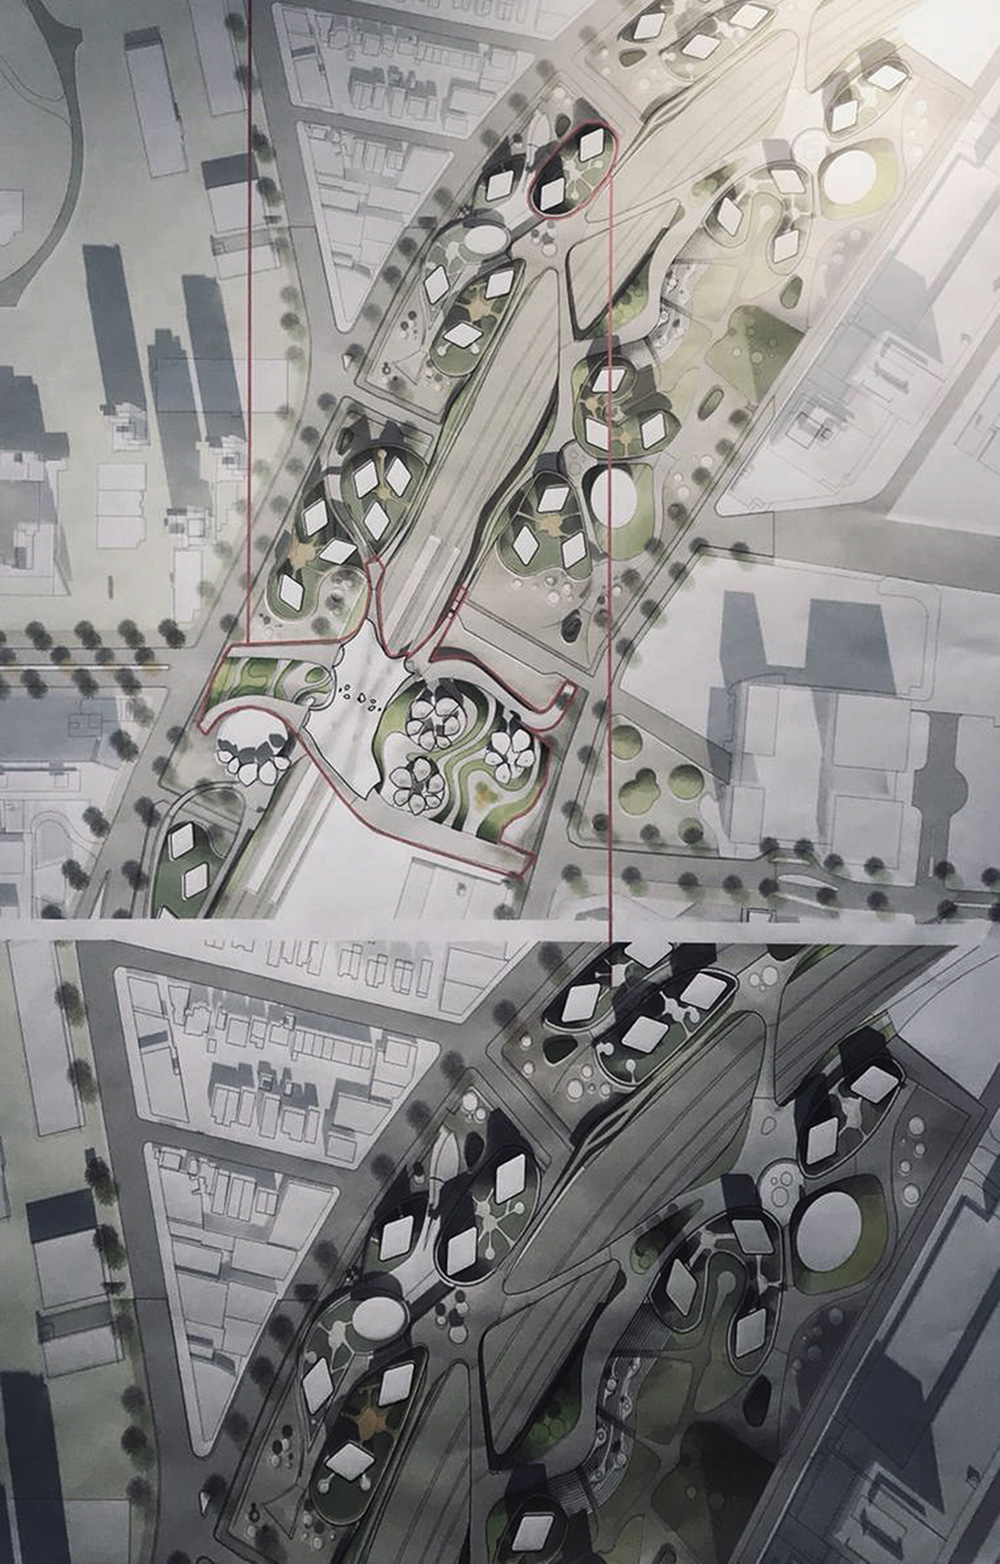 A site plan for an urban proposal in Adjunct Professor John DiDomenico’s class.